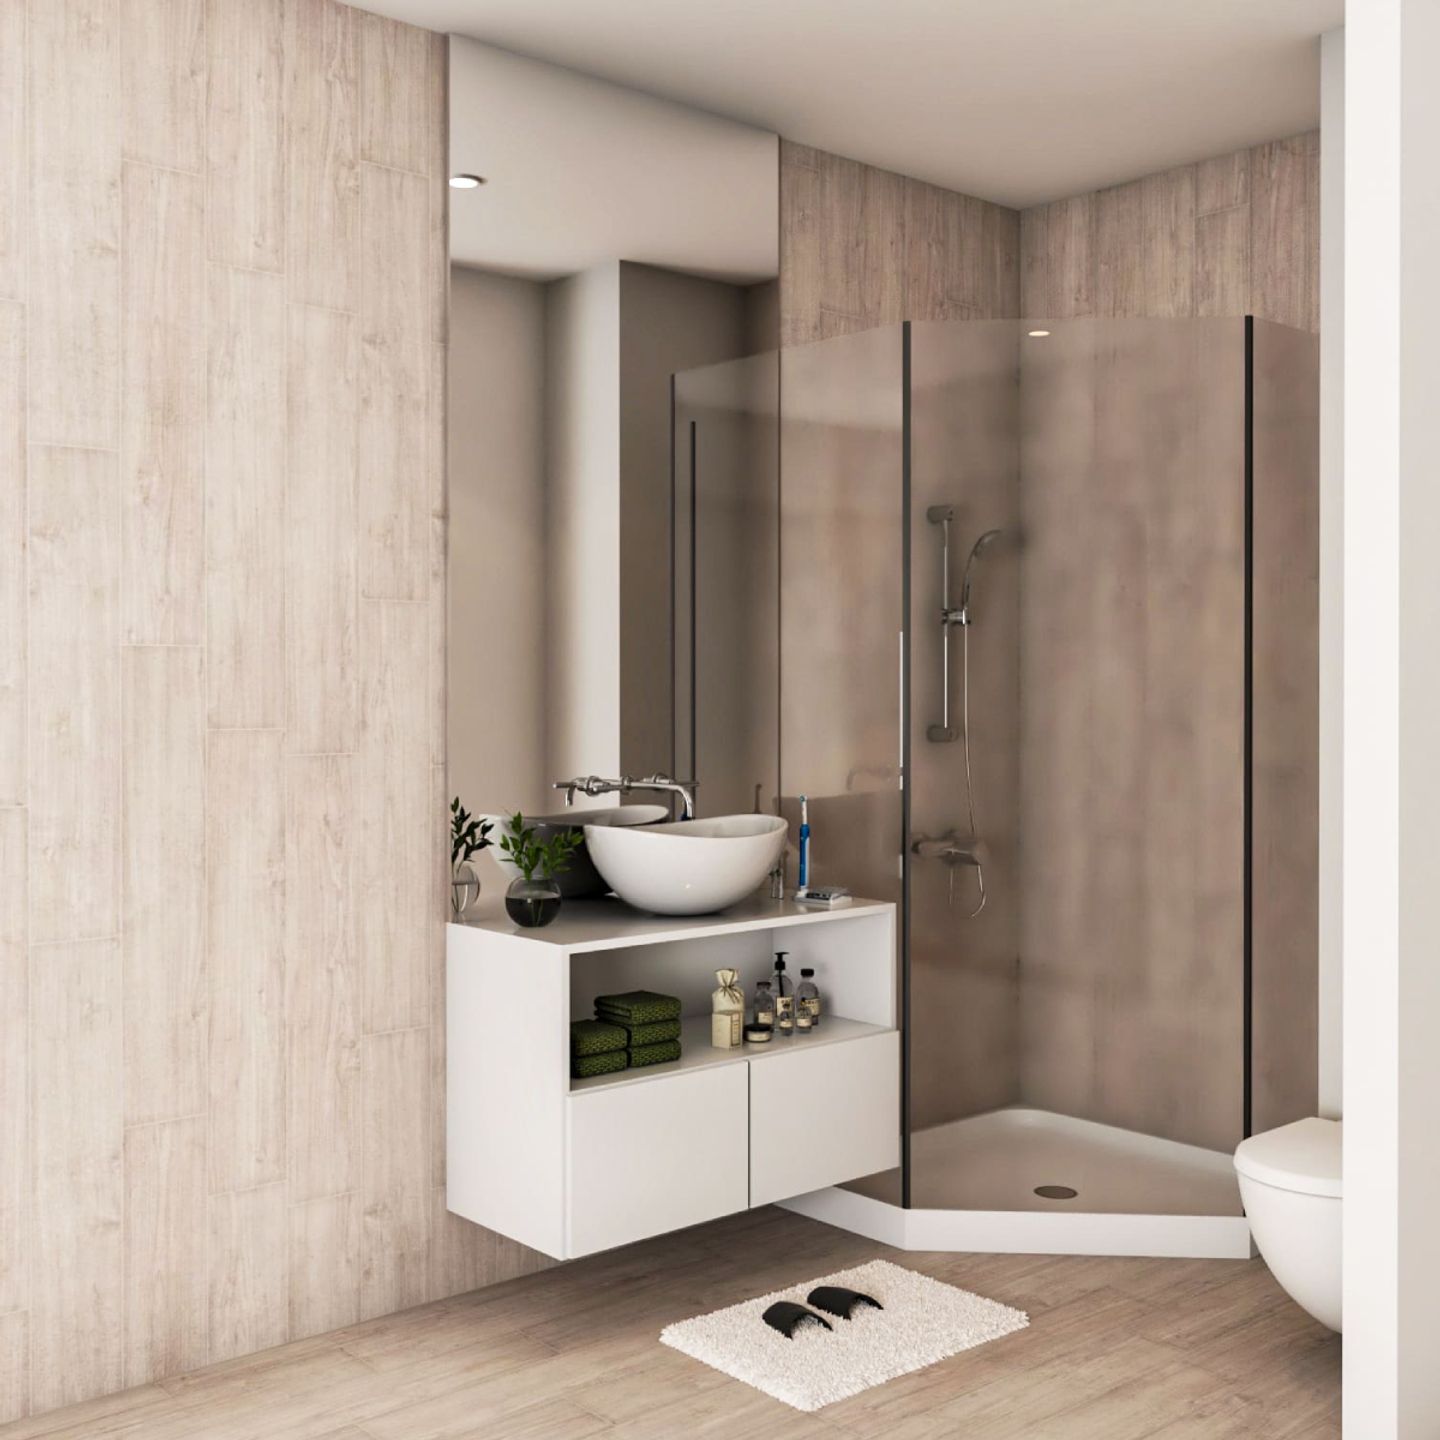 Ceramic Beige Bathroom Tile Design With A Matte Finish - Livspace